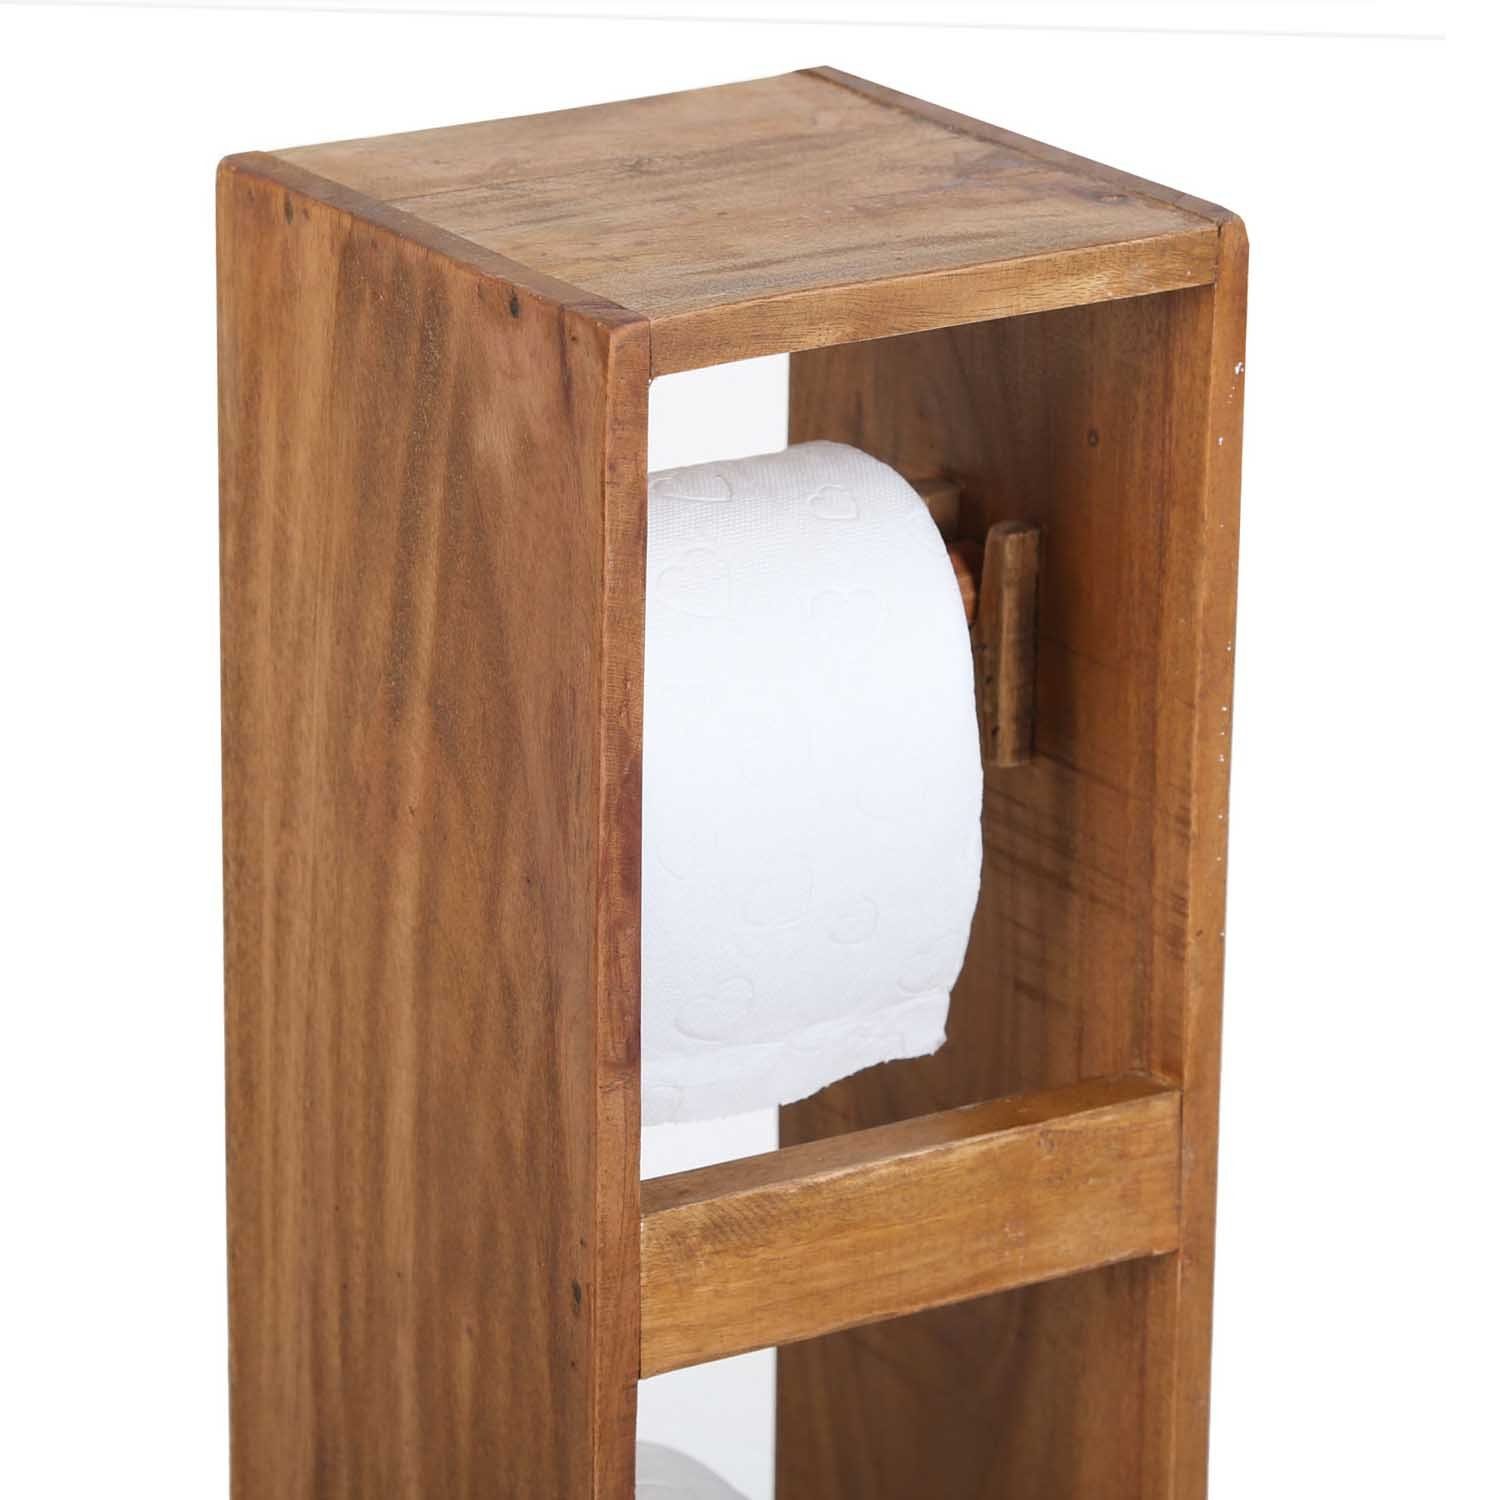 Casa Moro Toilettenpapierhalter Holz Toilettenpapierhalter Toilettenpapierständer, Teak aus ELISA recyceltem gefertigt Holz